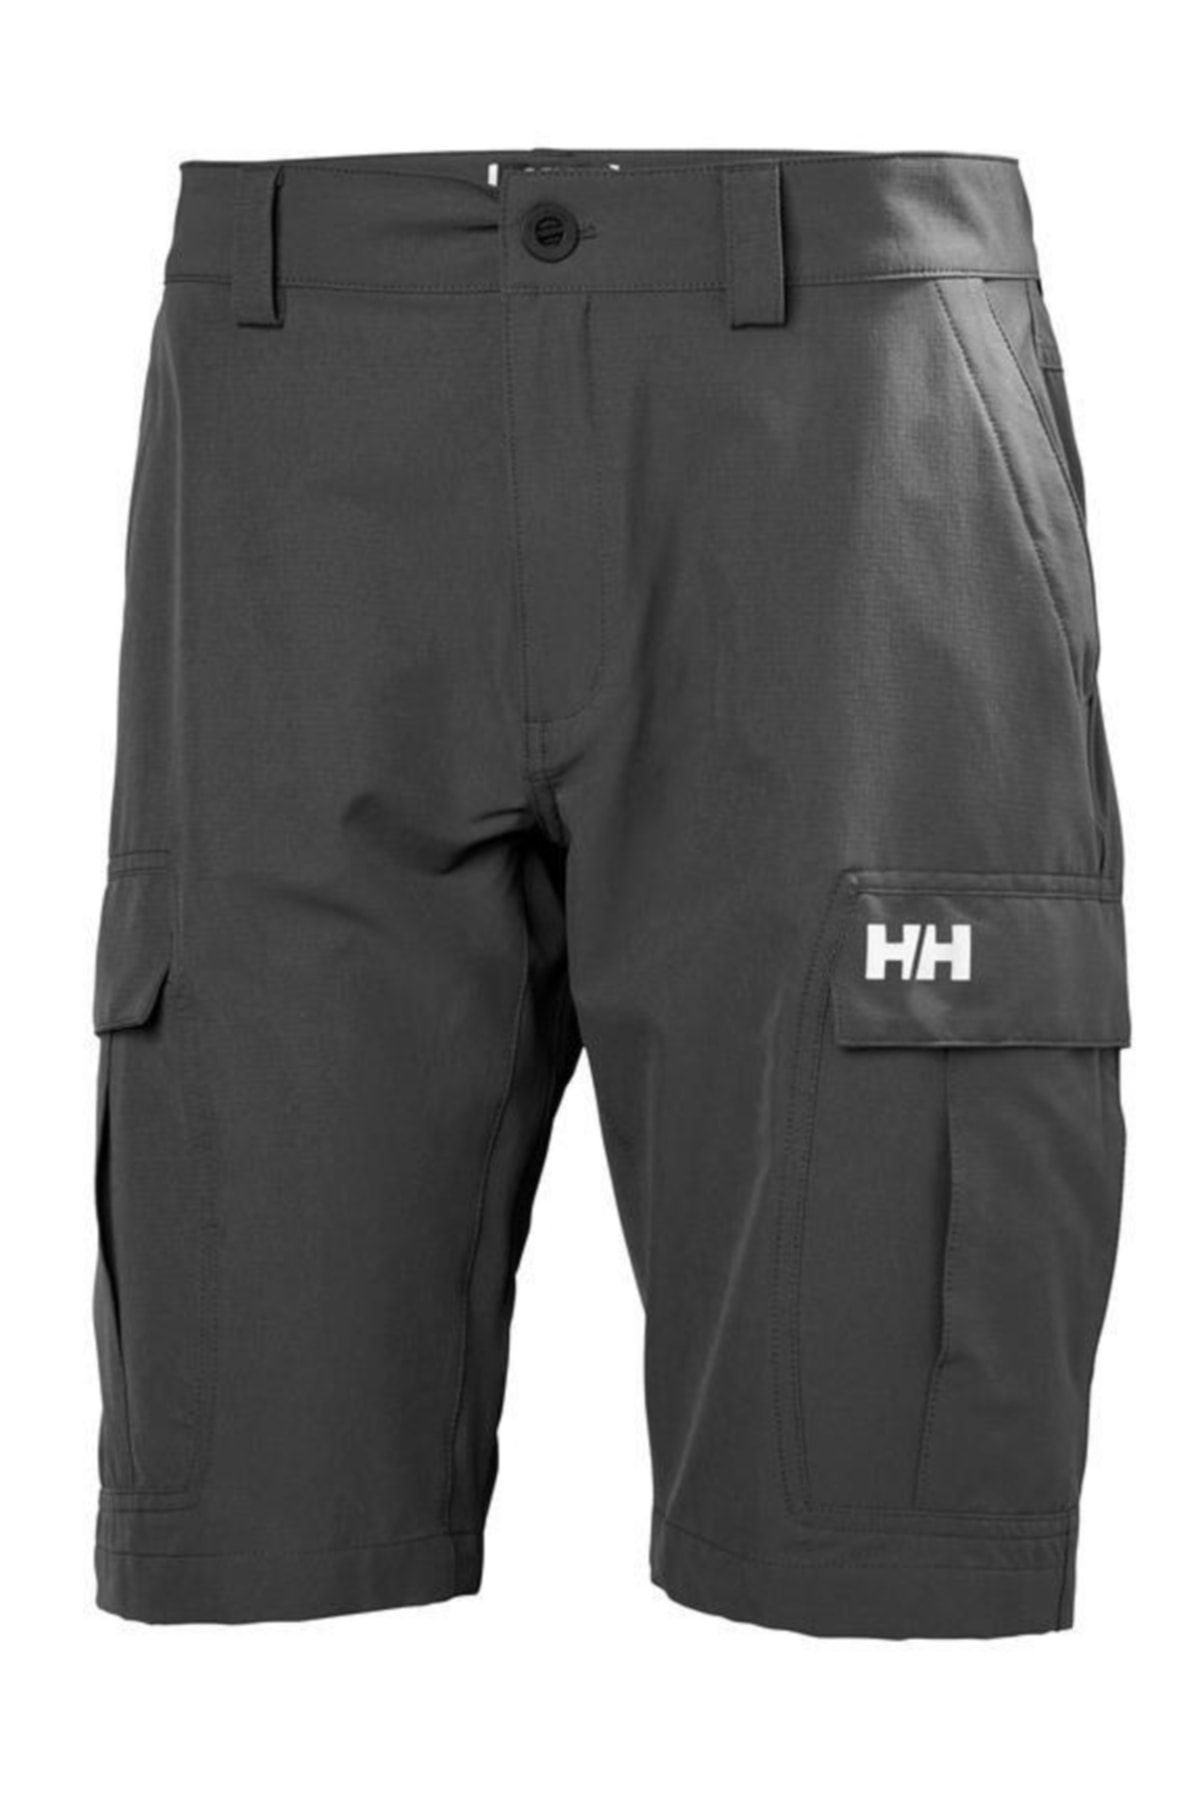 Helly Hansen Hh Hh Qd Cargo Shorts 11